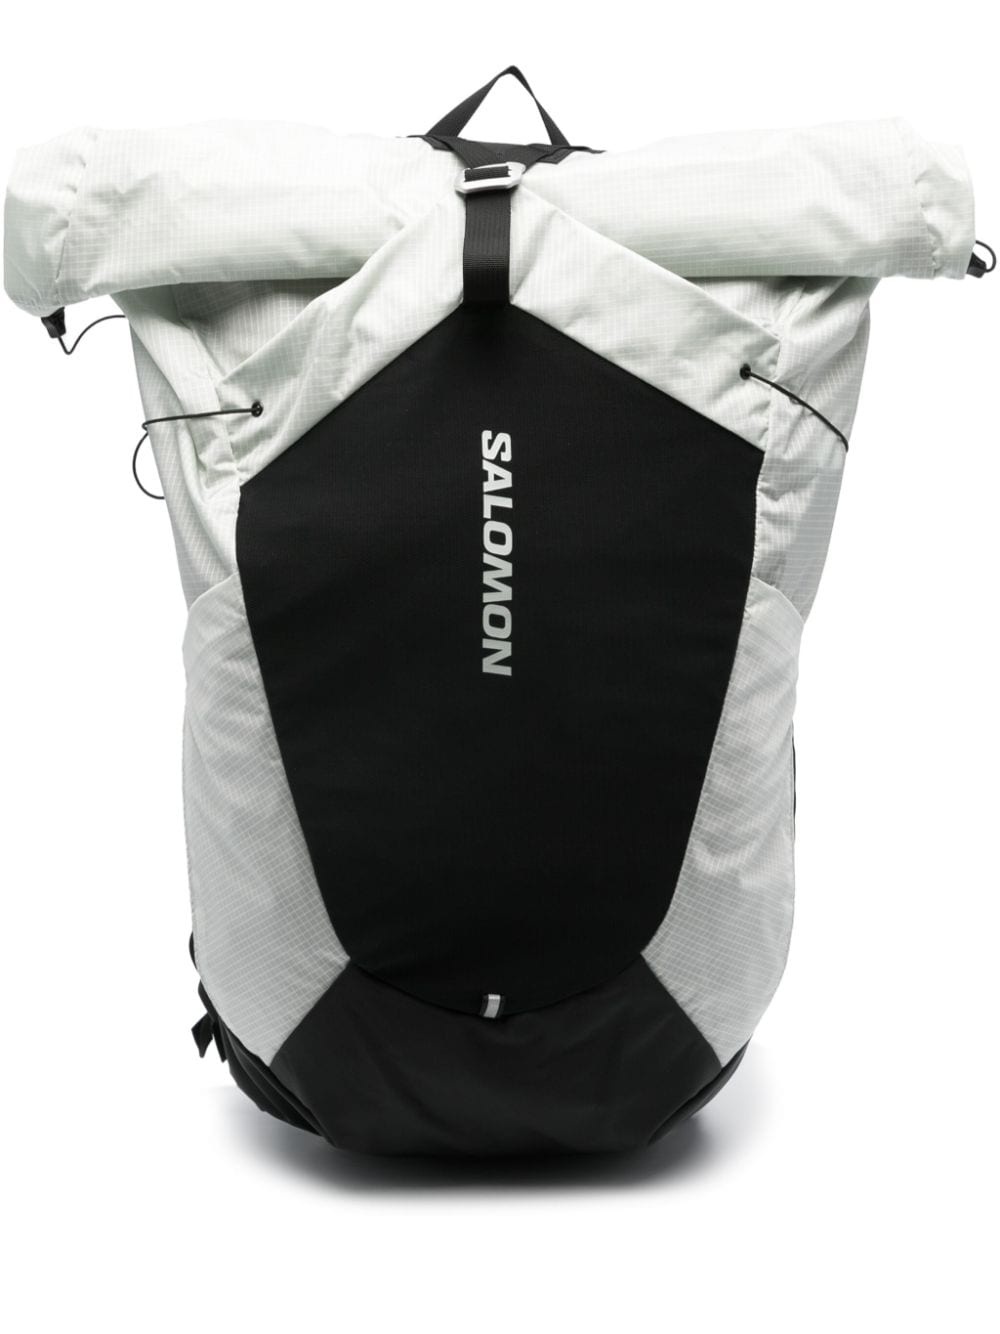 ACS 20 panelled backpack - 1